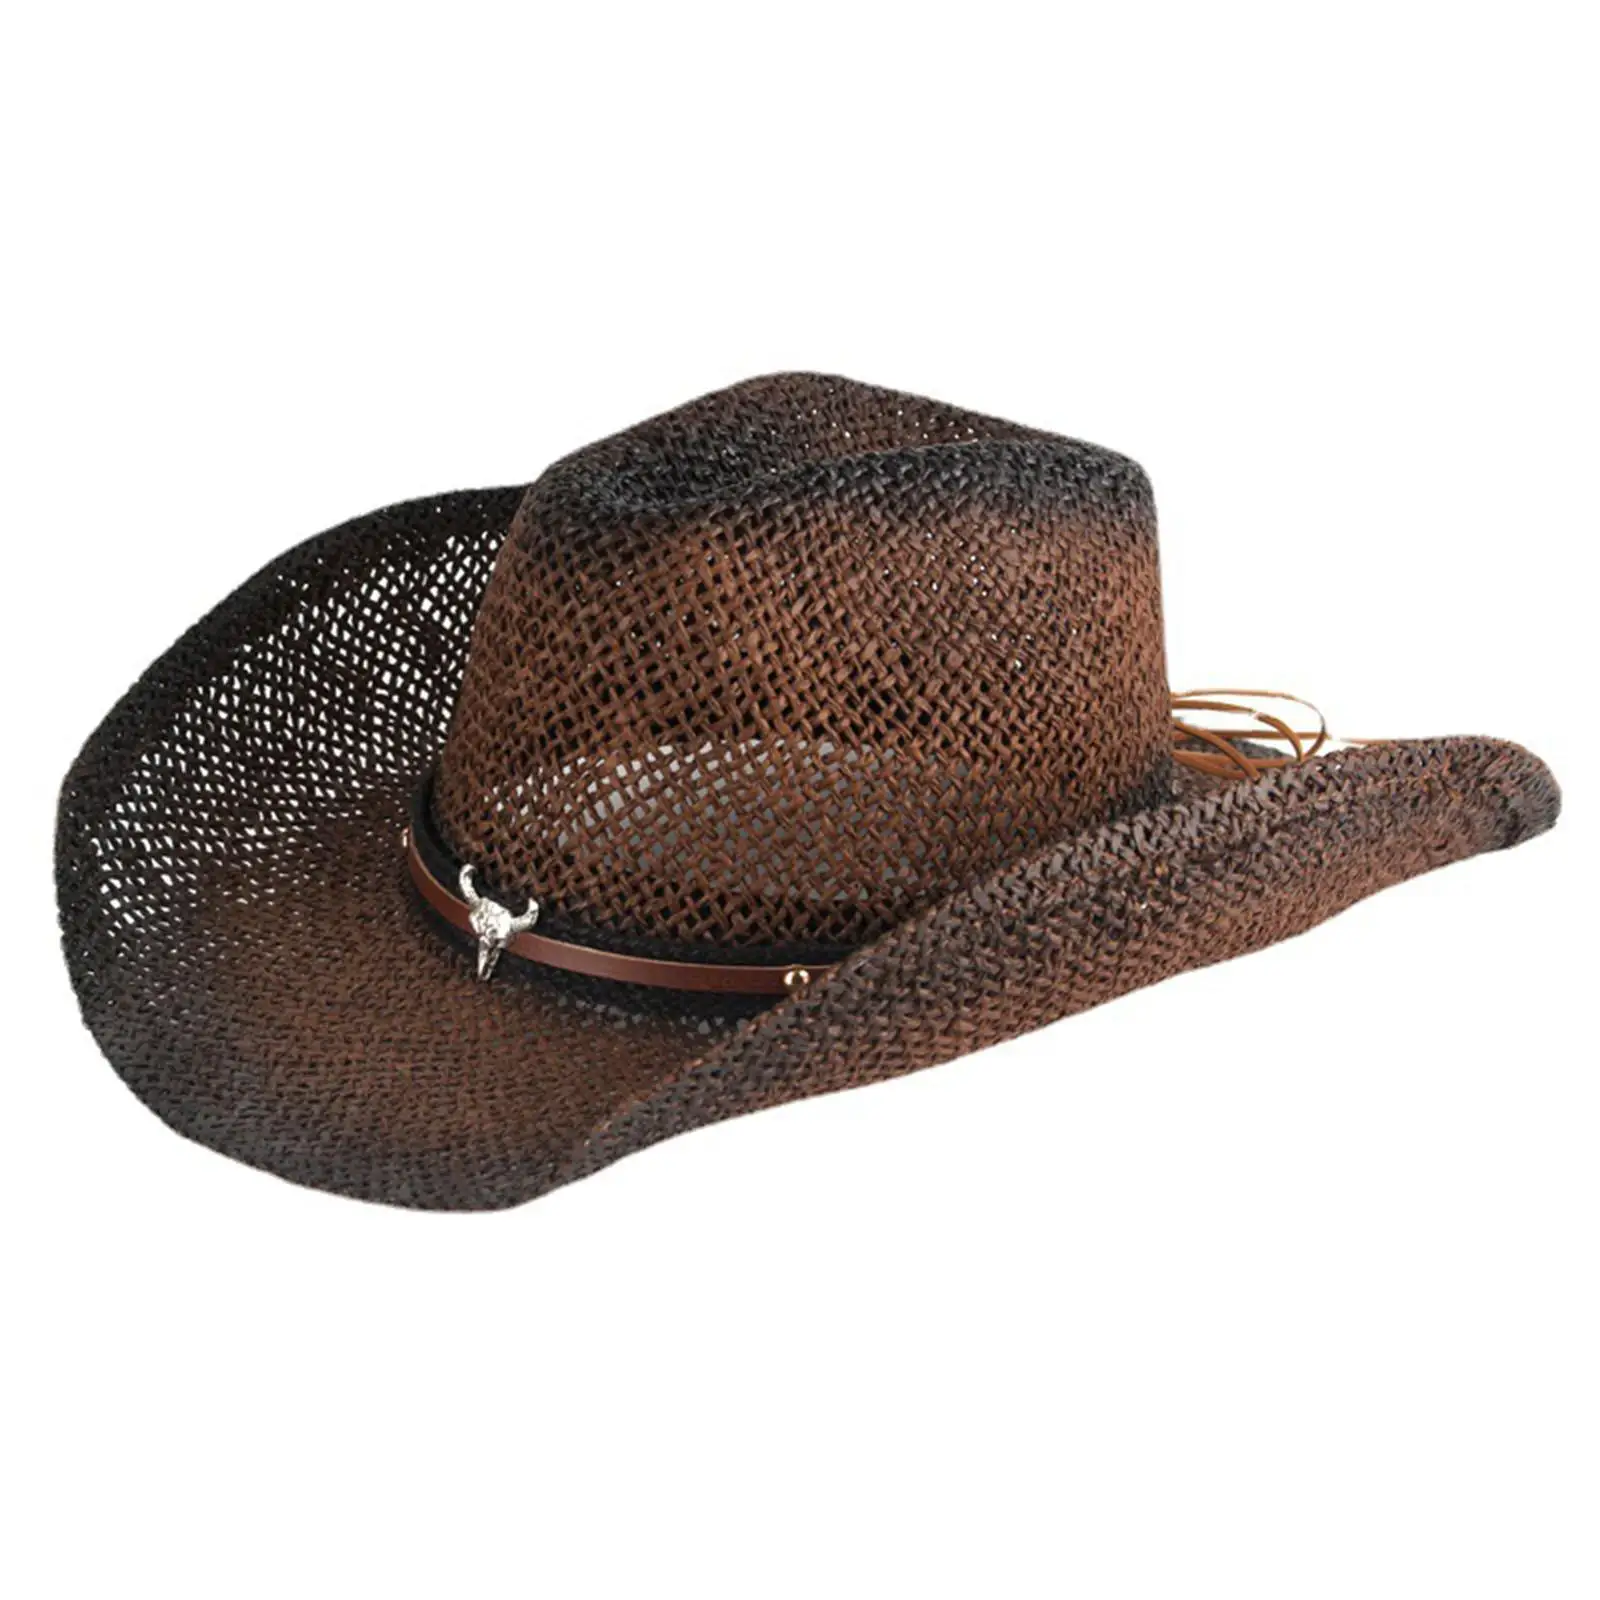 Straw Cowboy hat Shapeable Sombreros Vagueros Sunscreen Hat Unisex Cowboy Hats for beach Rodeo summer